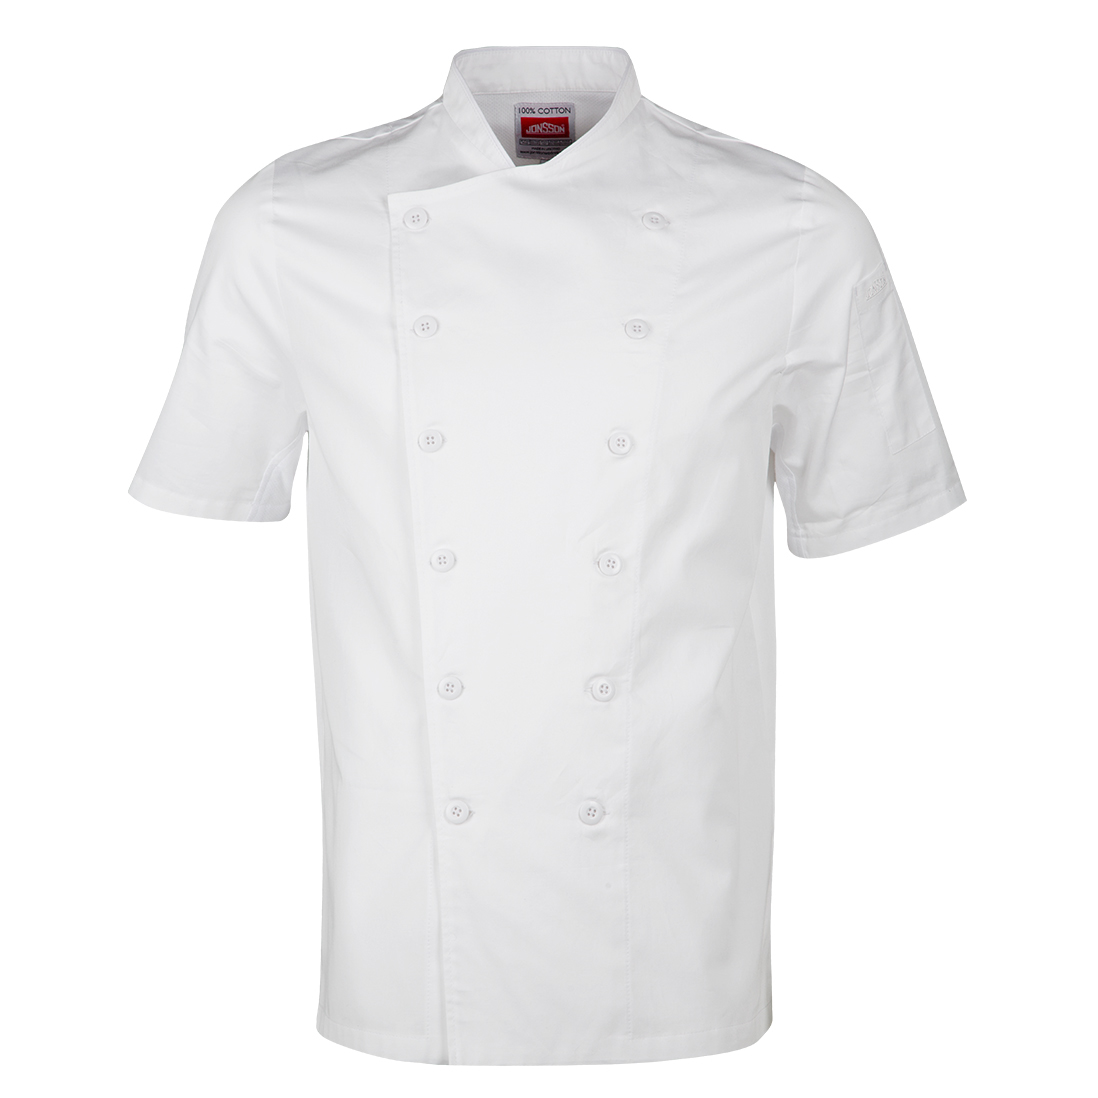 Chef Jacket Reaction 0417 White and Black sizes XS-2XL Free Shipping 